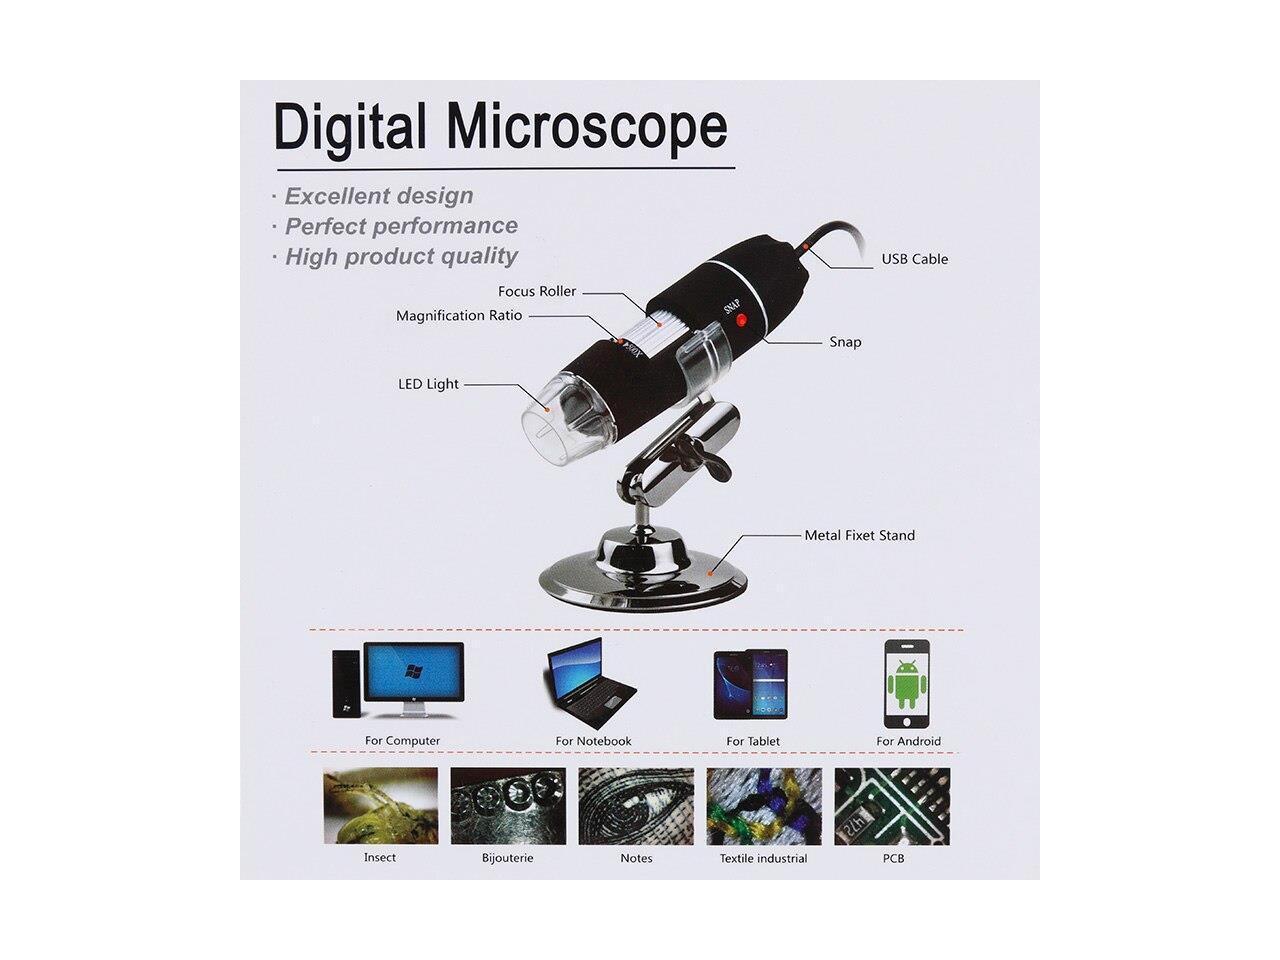 CHR Mega Pixels 500X 1000X 1600X 8 LED Digital USB Microscope Microscopio Magnifier Electronic Stereo USB Endoscope Camera,1000X 